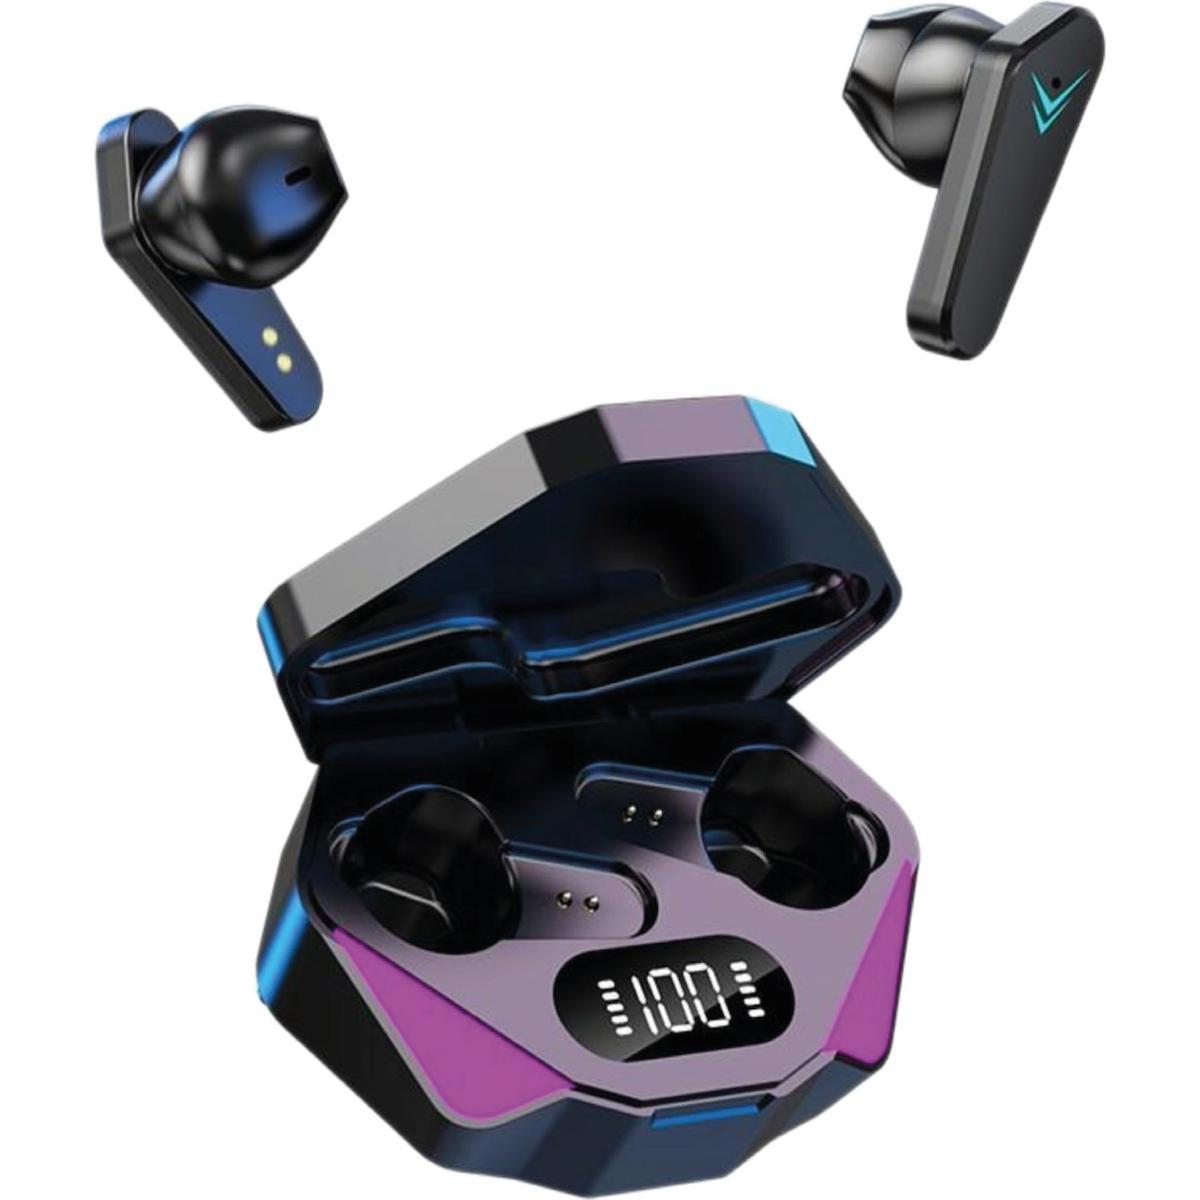 Sprange Gm-6 5.2 Oyuncu Kulak İçi Bluetooth Kulaklık Siyah